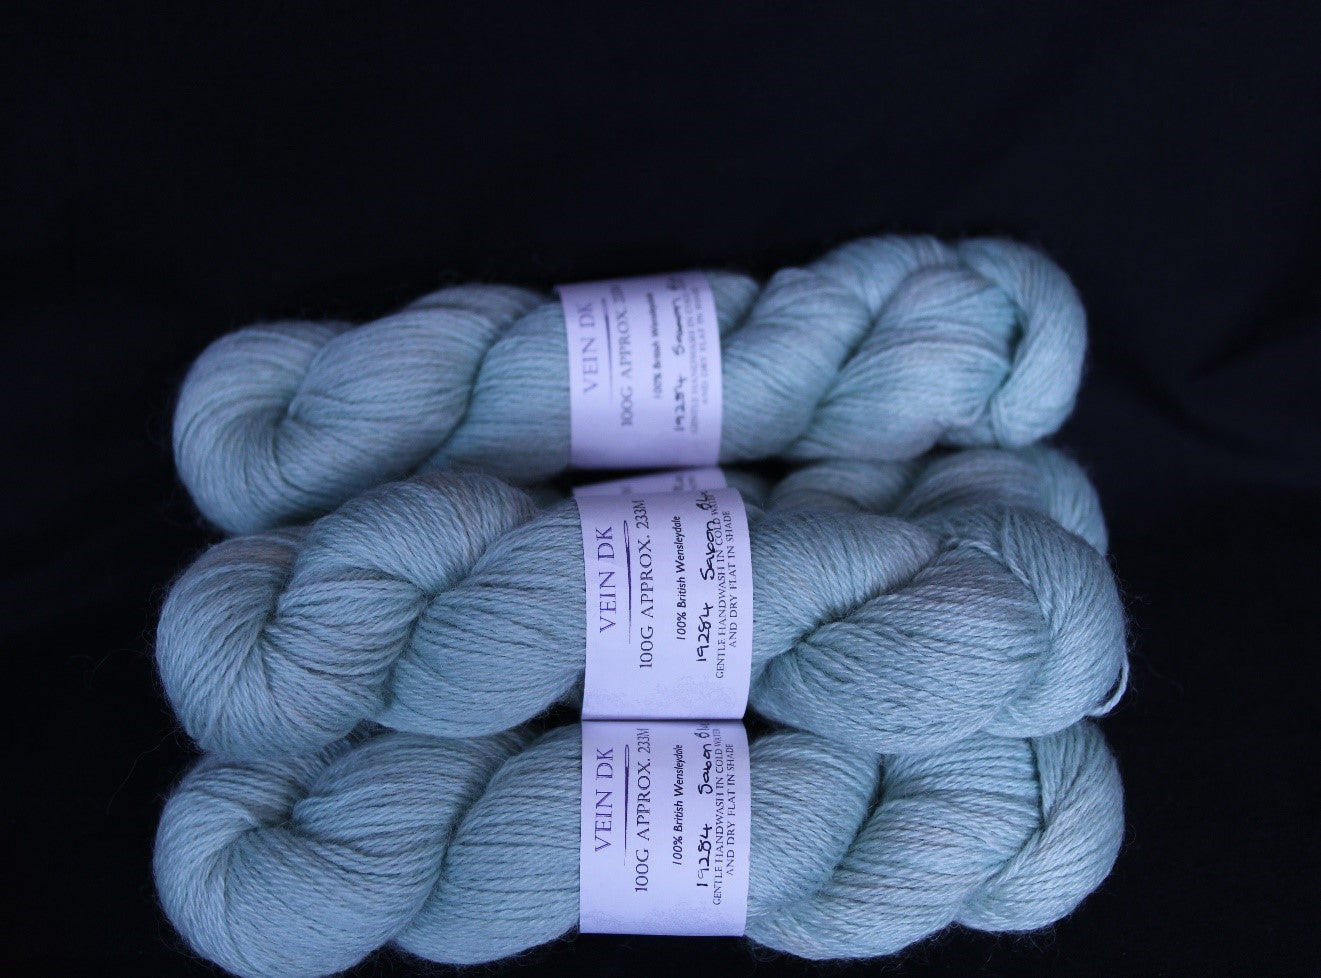 Turquoise double knit Wensleydale